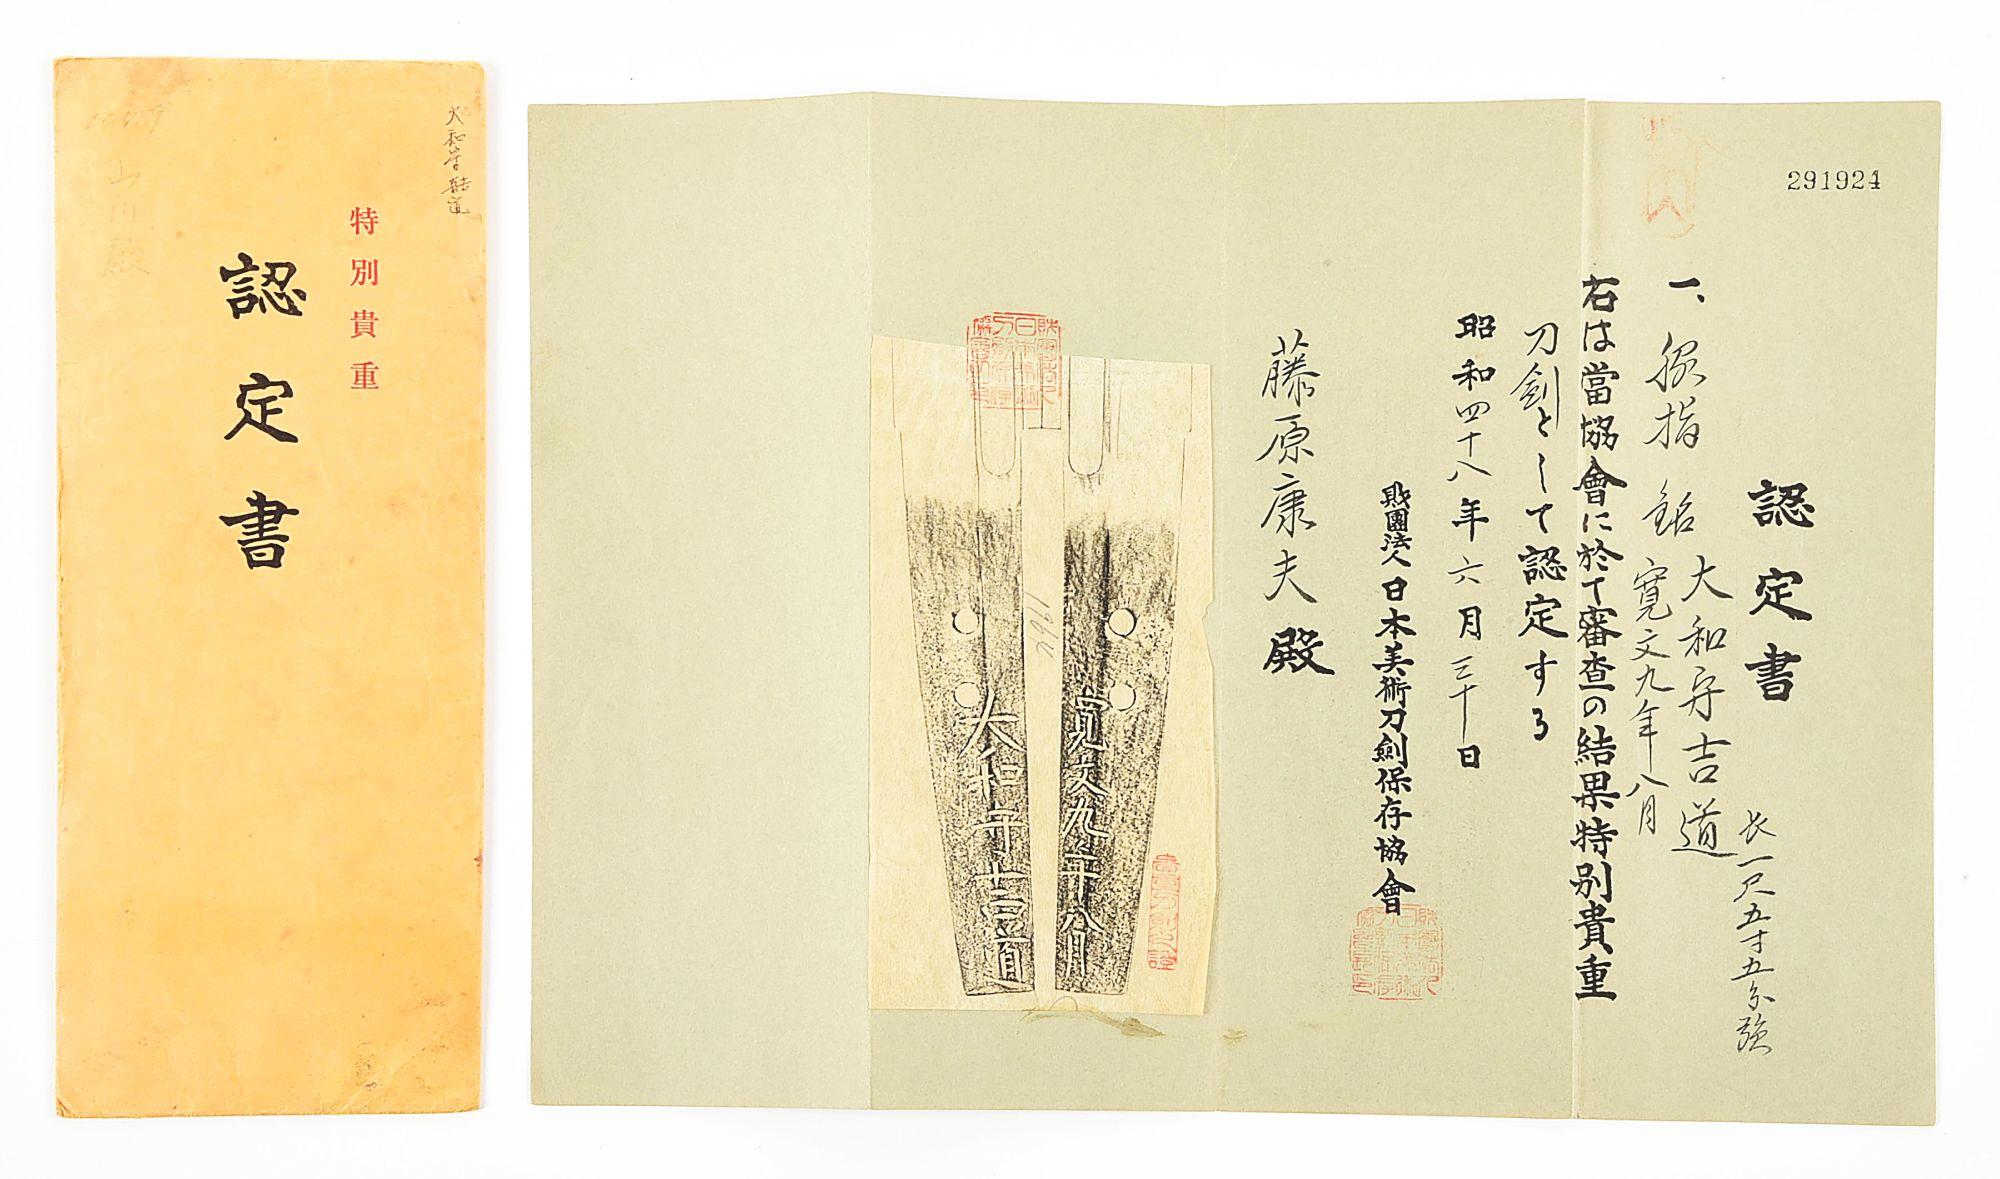 ATTRACTIVE WAKIZASHI, SIGNED YAMATO NO KAMI YOSHIMICHI, WITH NBTHK TOKUBETSU KICHO PAPERS TO FIRST G